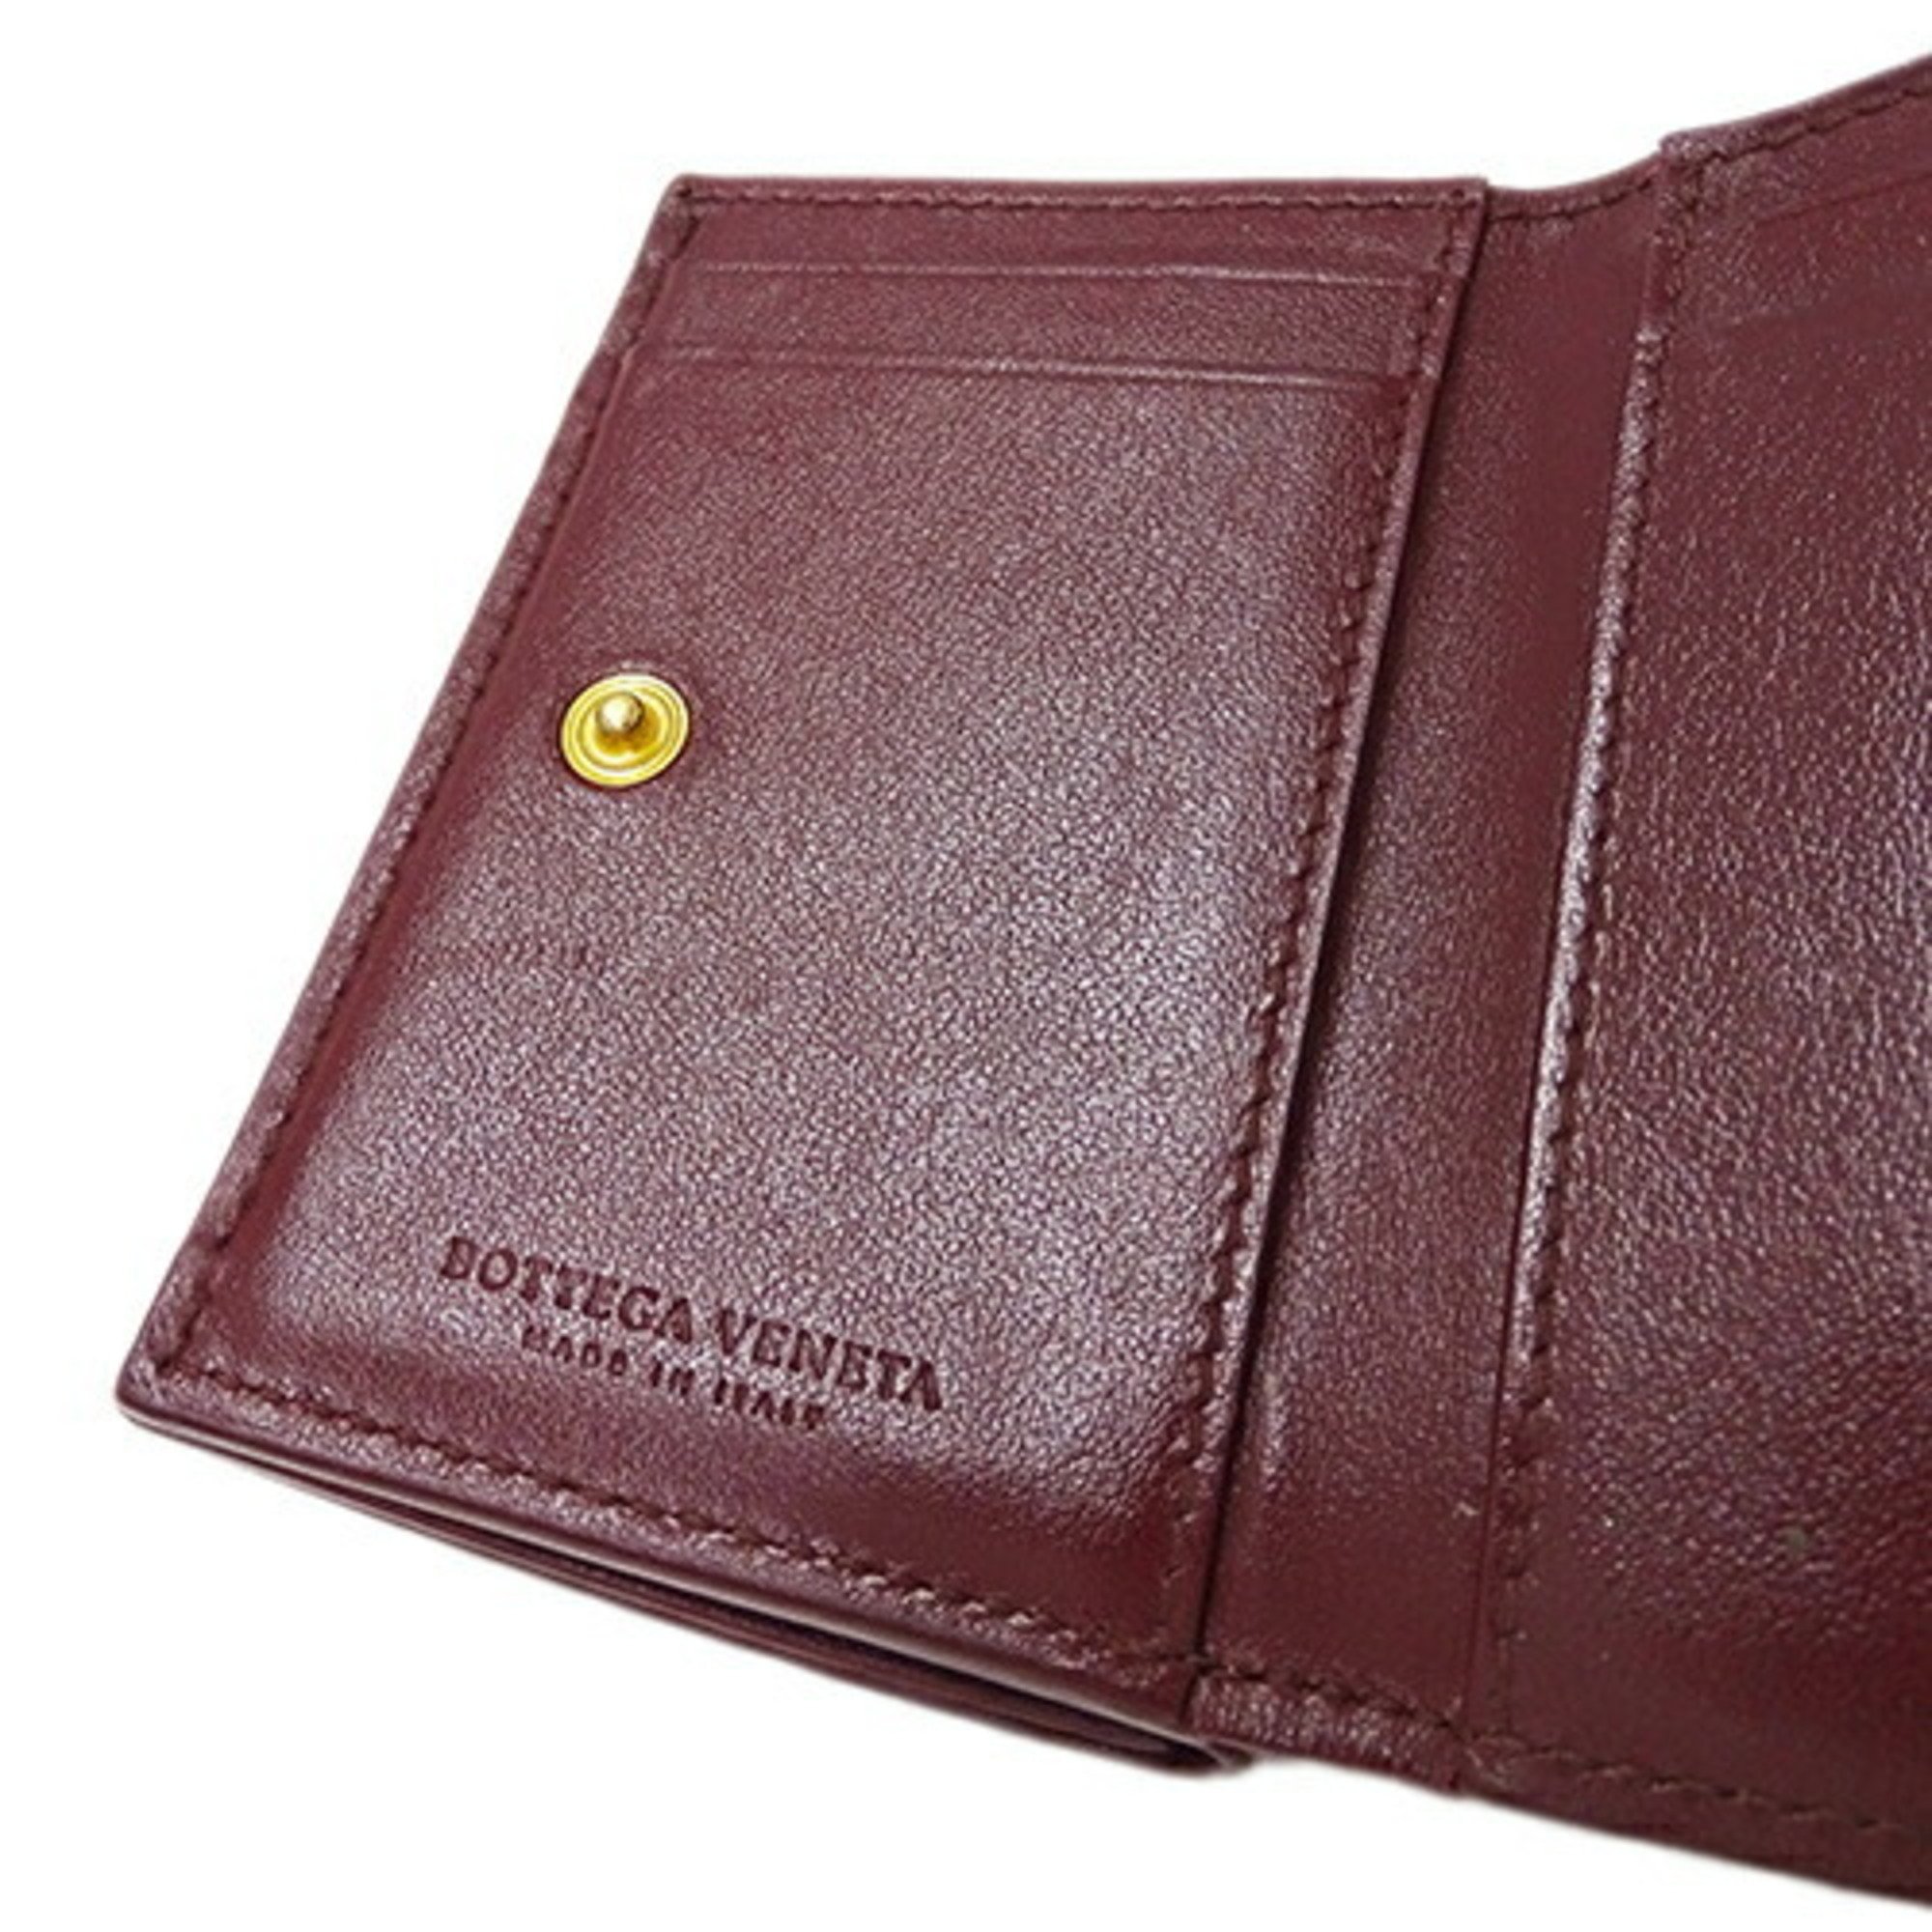 BOTTEGA VENETA Wallet Women's Men's Trifold Intrecciato Leather Bordeaux Red 635561